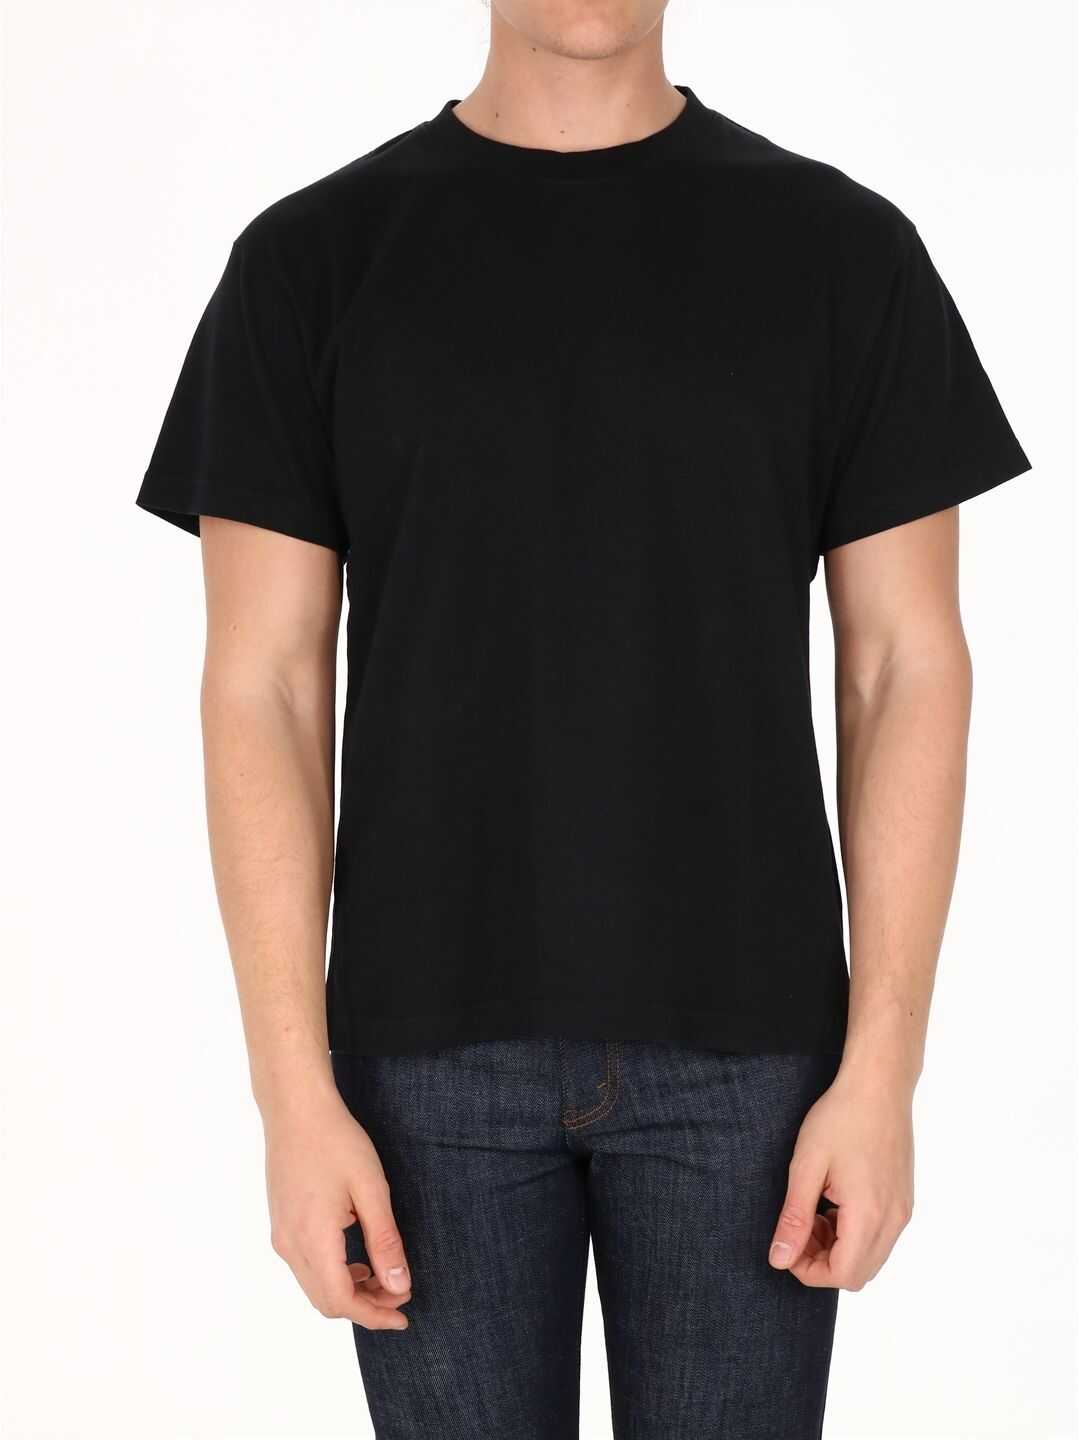 A-COLD-WALL* Printed T-Shirt Black